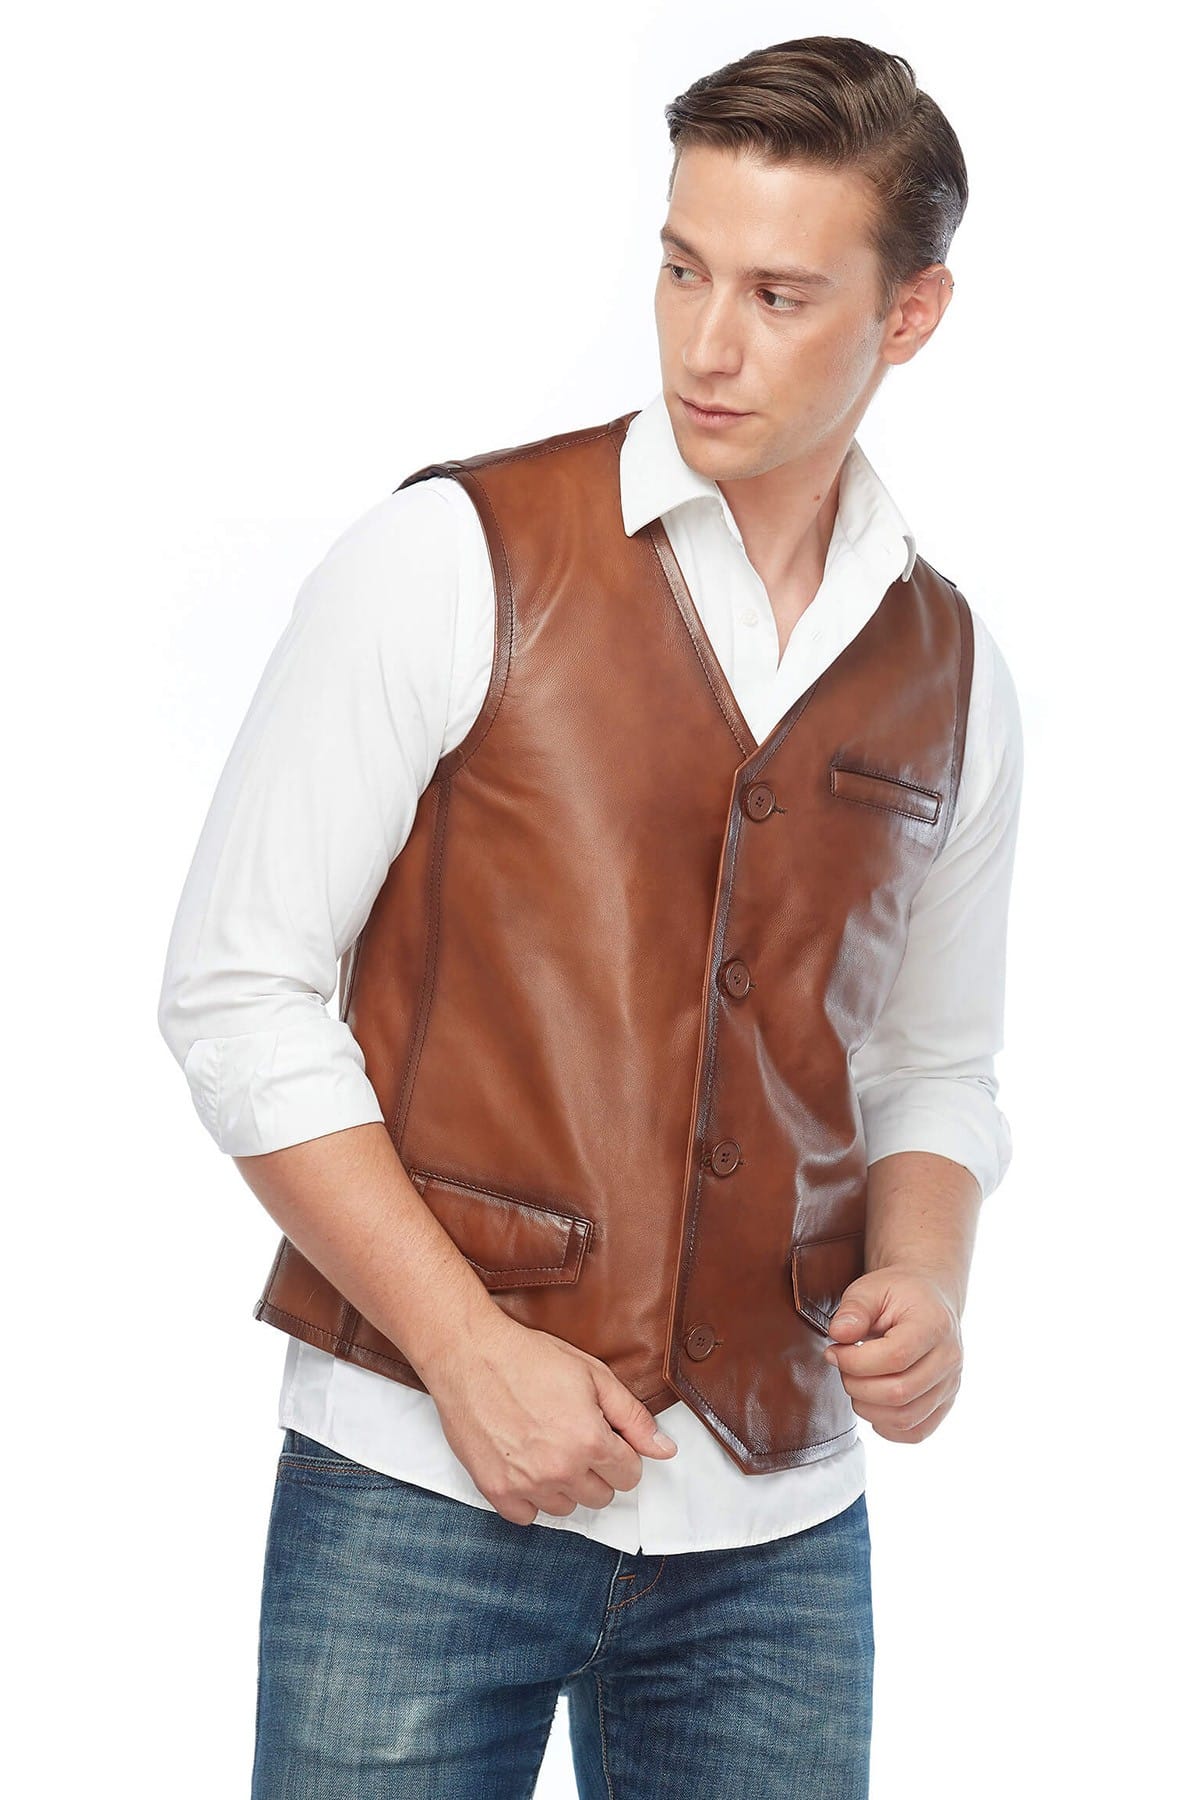 Dominic Adams Tobacco Genuine Leather Vest Posing